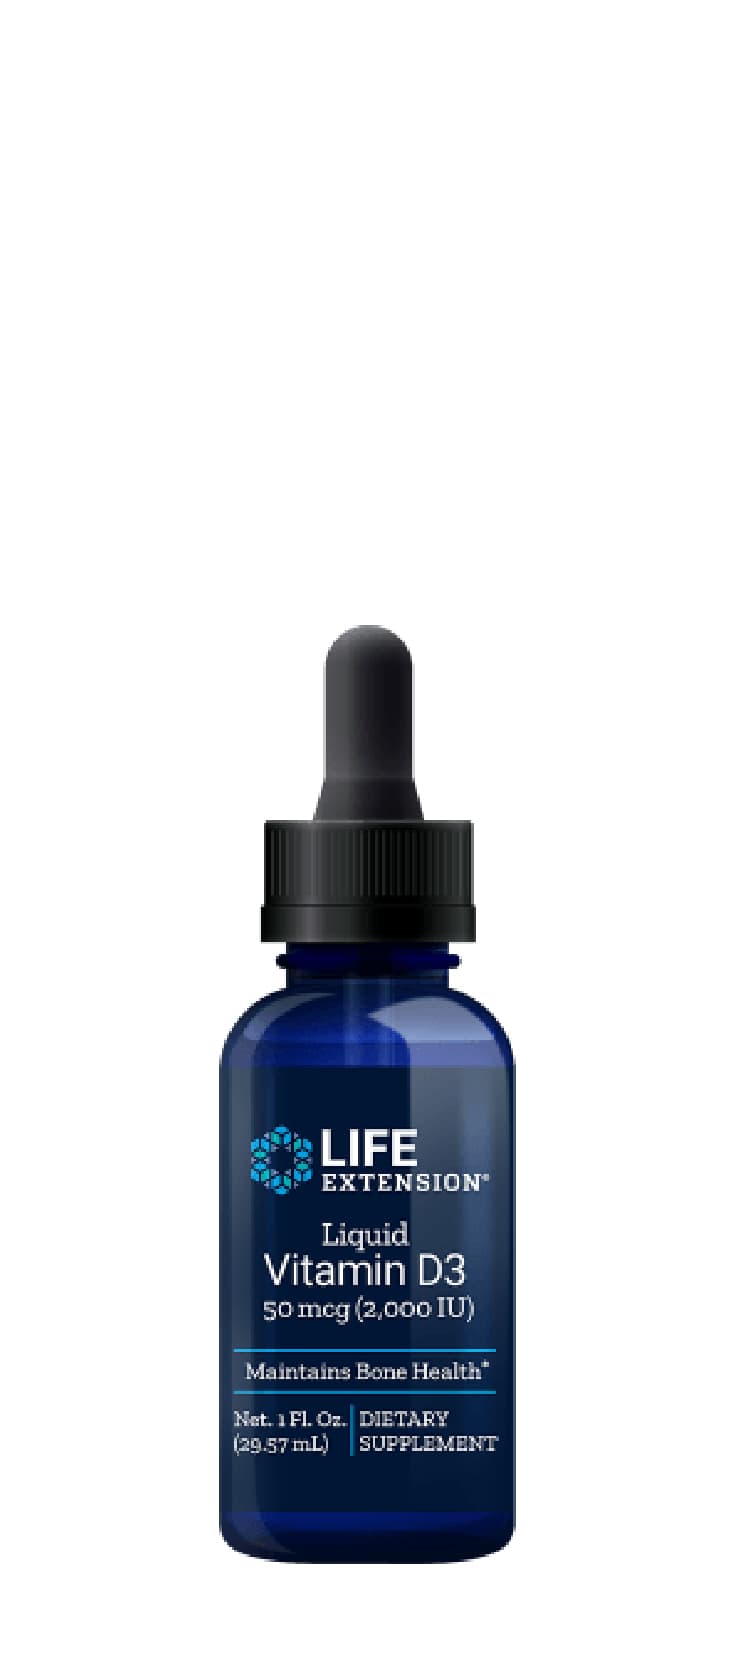 Life Extension Liquid Vitamin D3 bei LiveHelfi kaufen